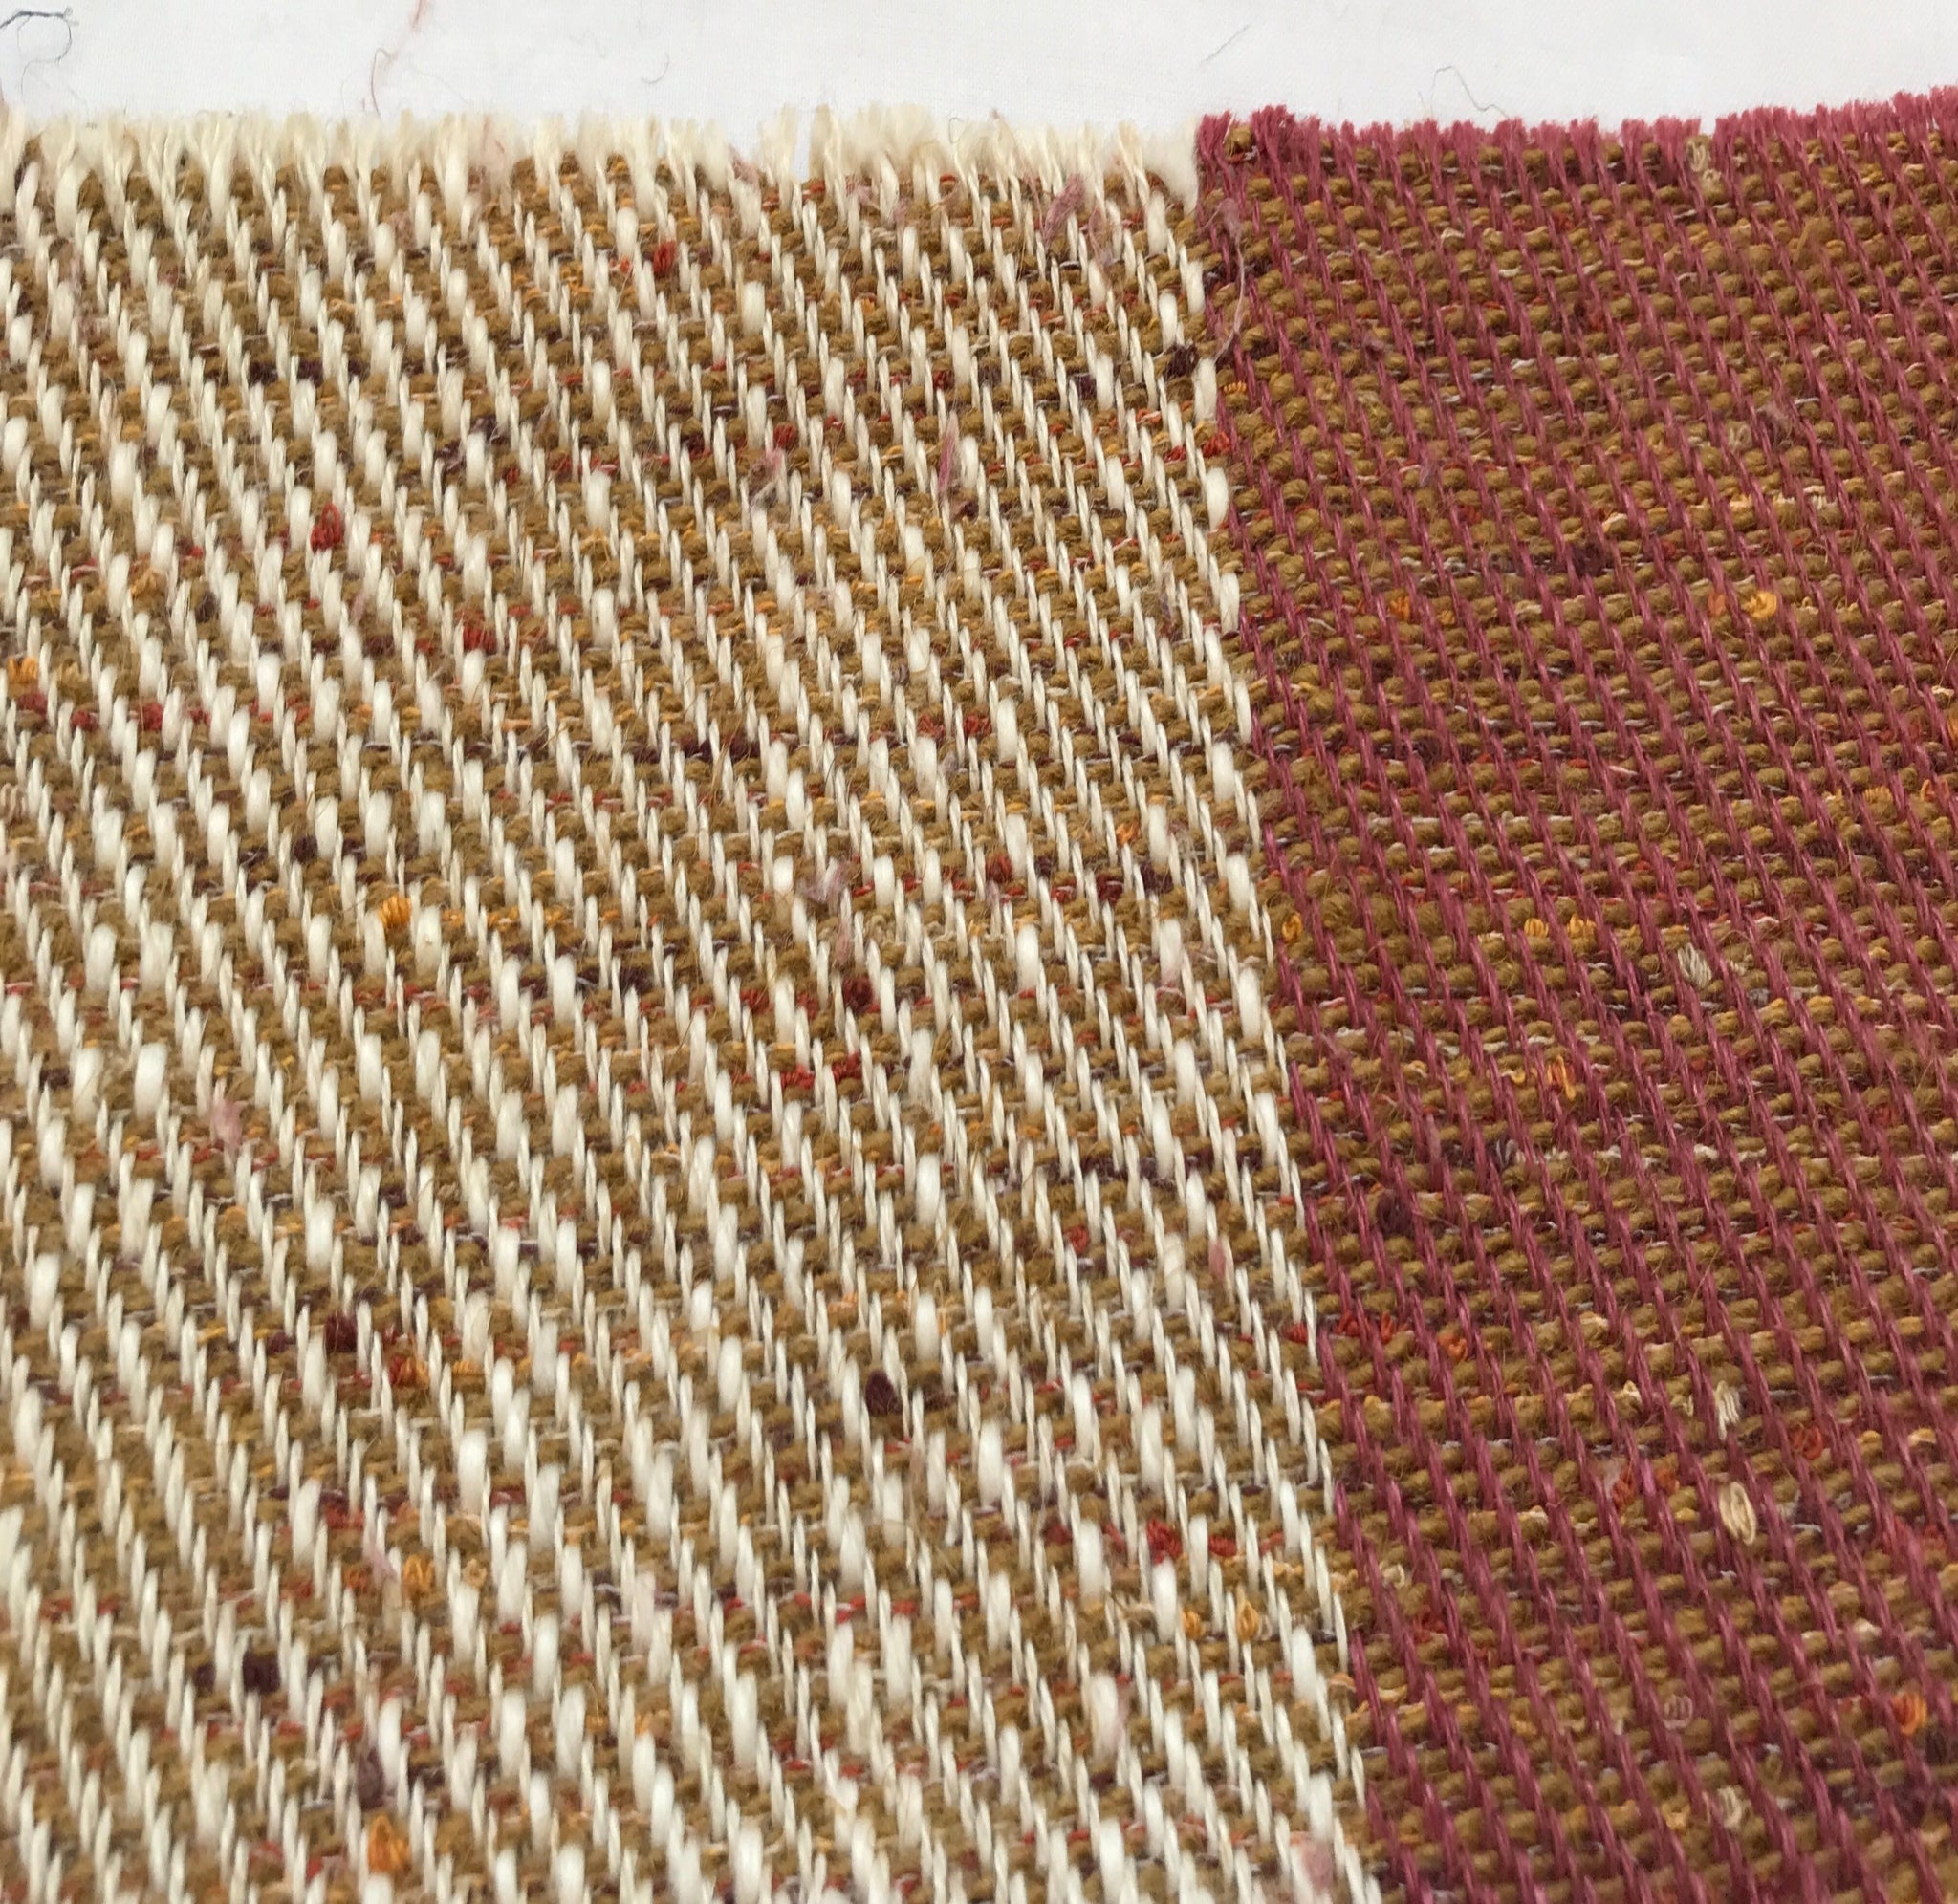 Handwoven Rust Oatmeal diagonal weave